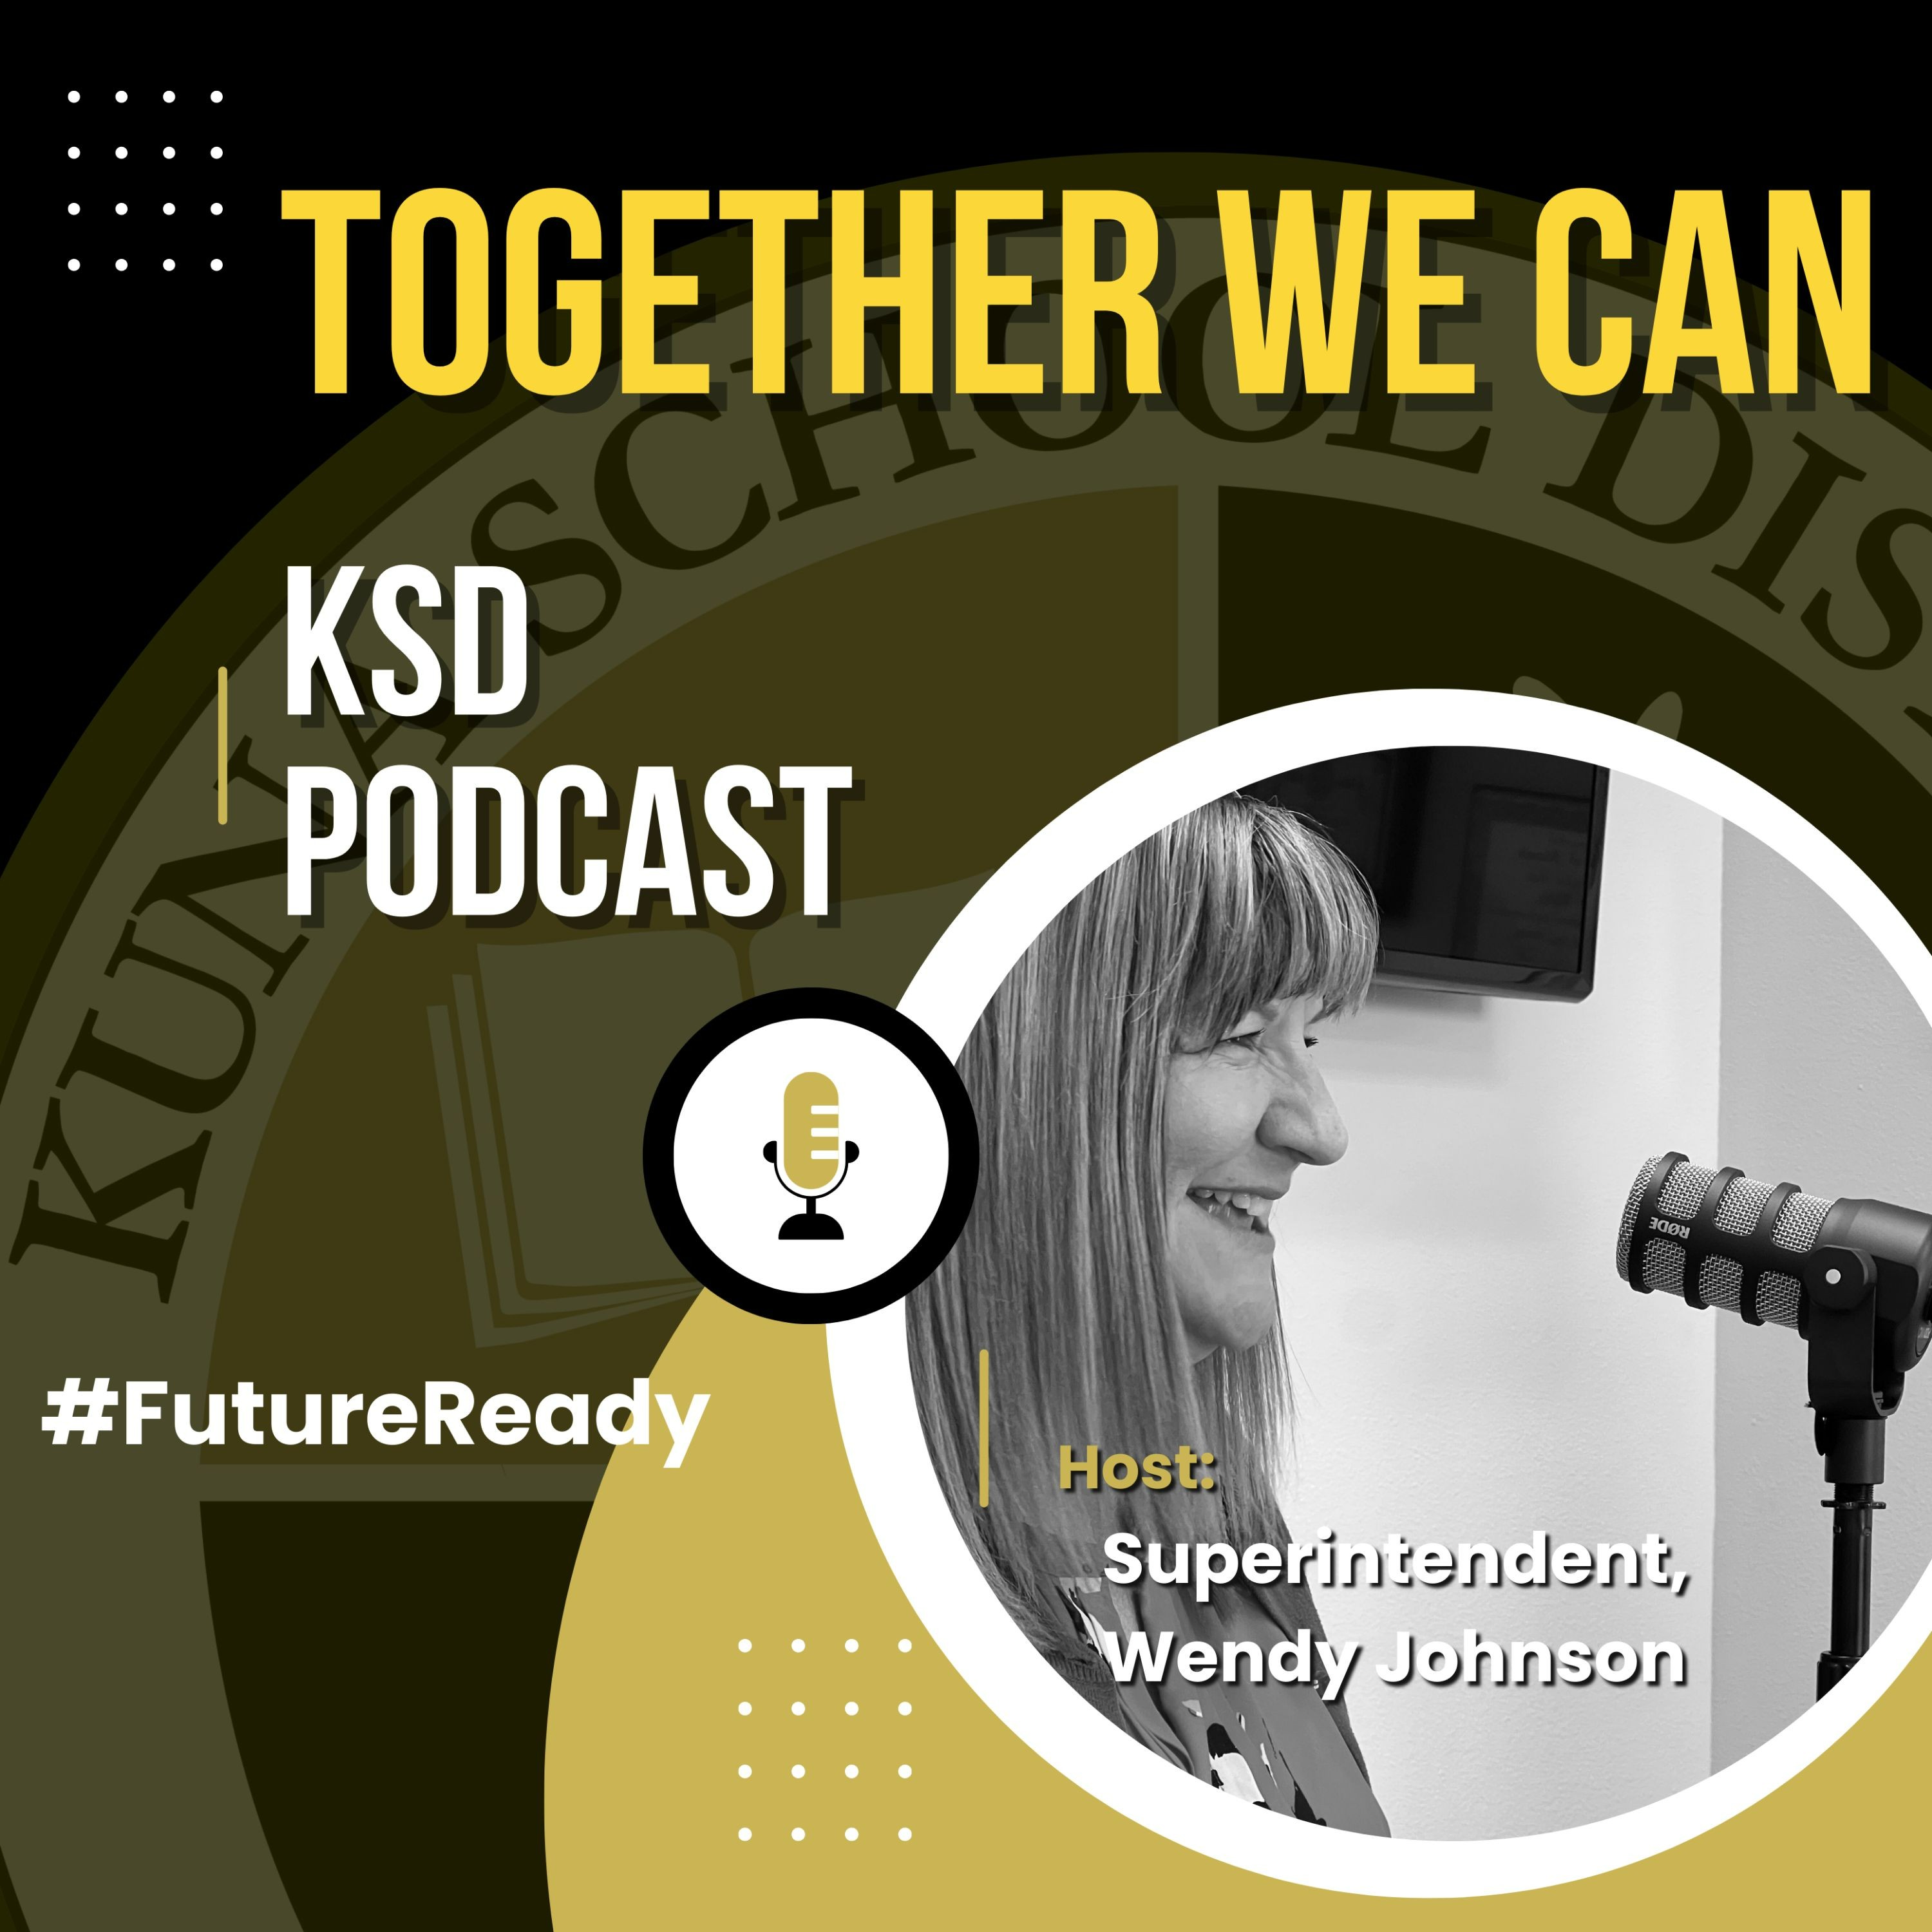 KSD - Together We Can